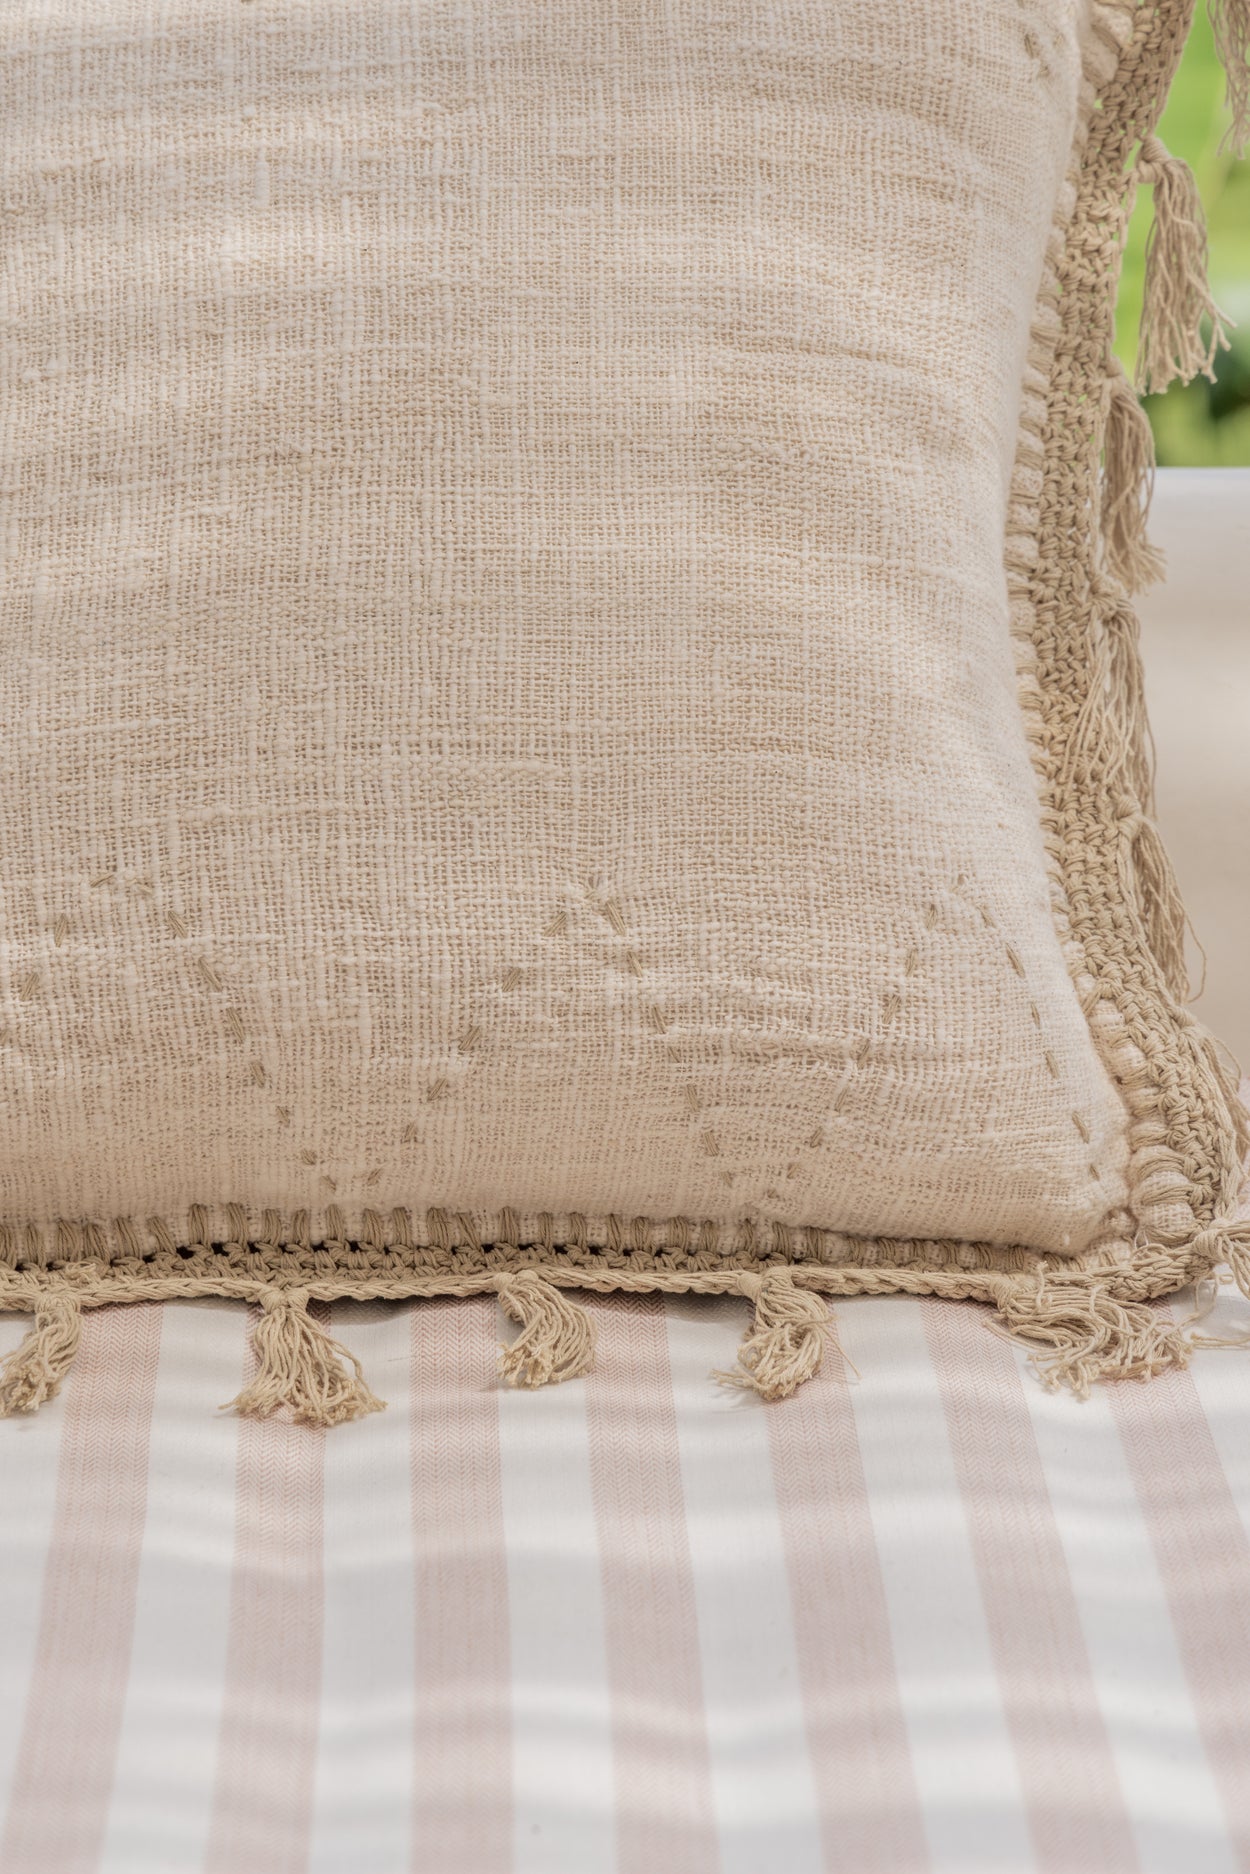 Gaia Hand Stitched Cotton Throw Pillow